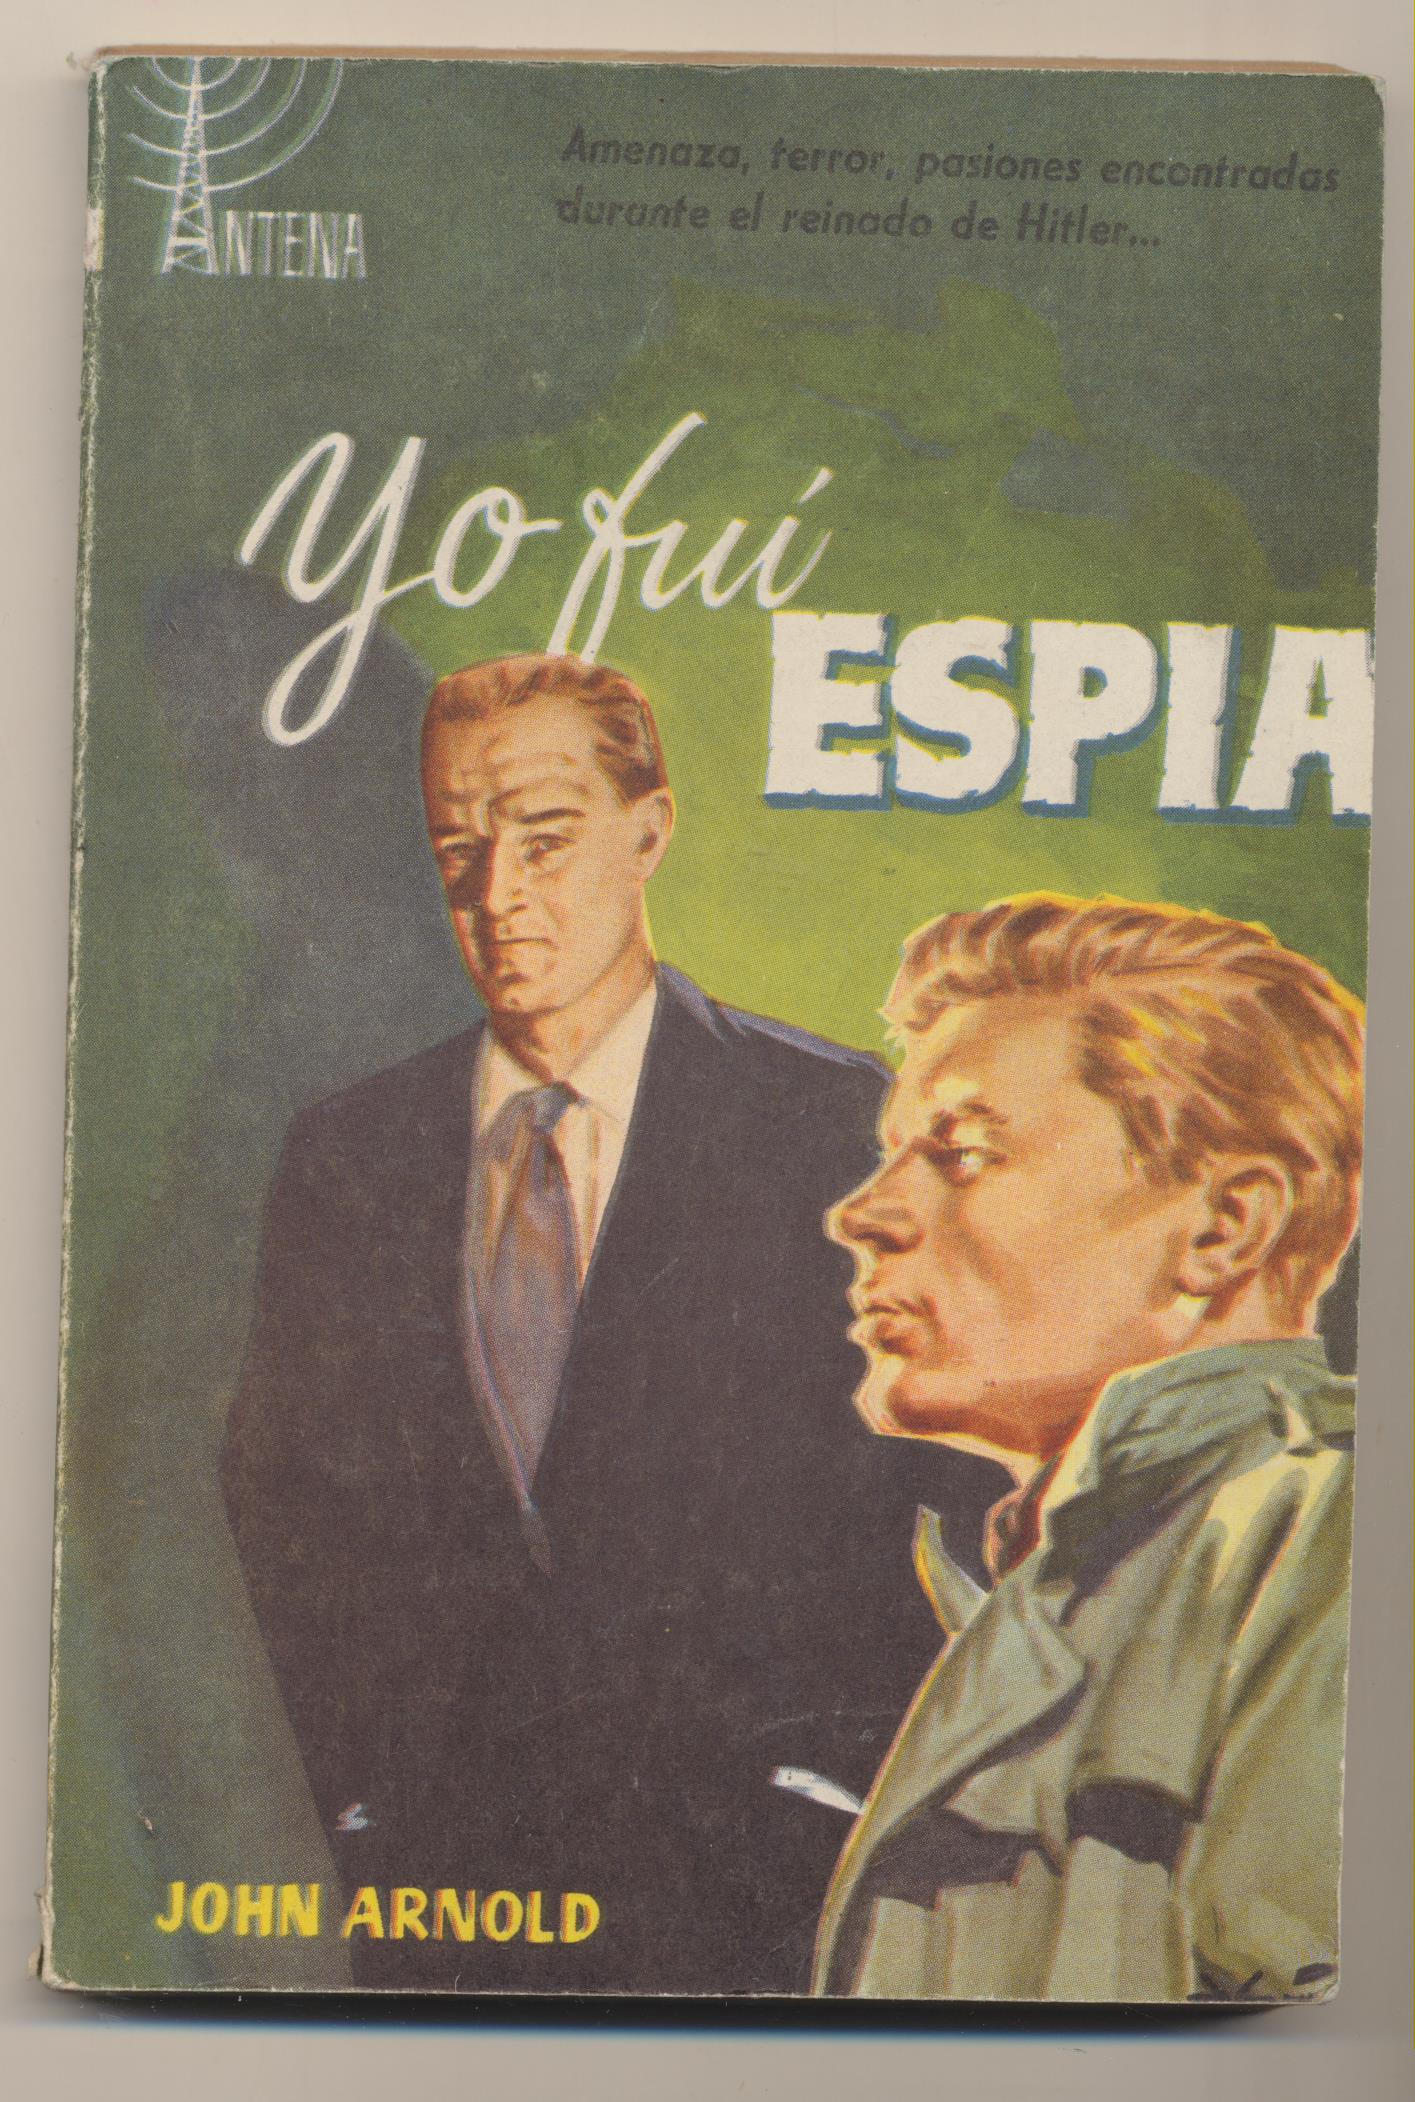 Colección Antena nº 7. John Arnold. Yo fue espía. 1ª Edición Cid 1957